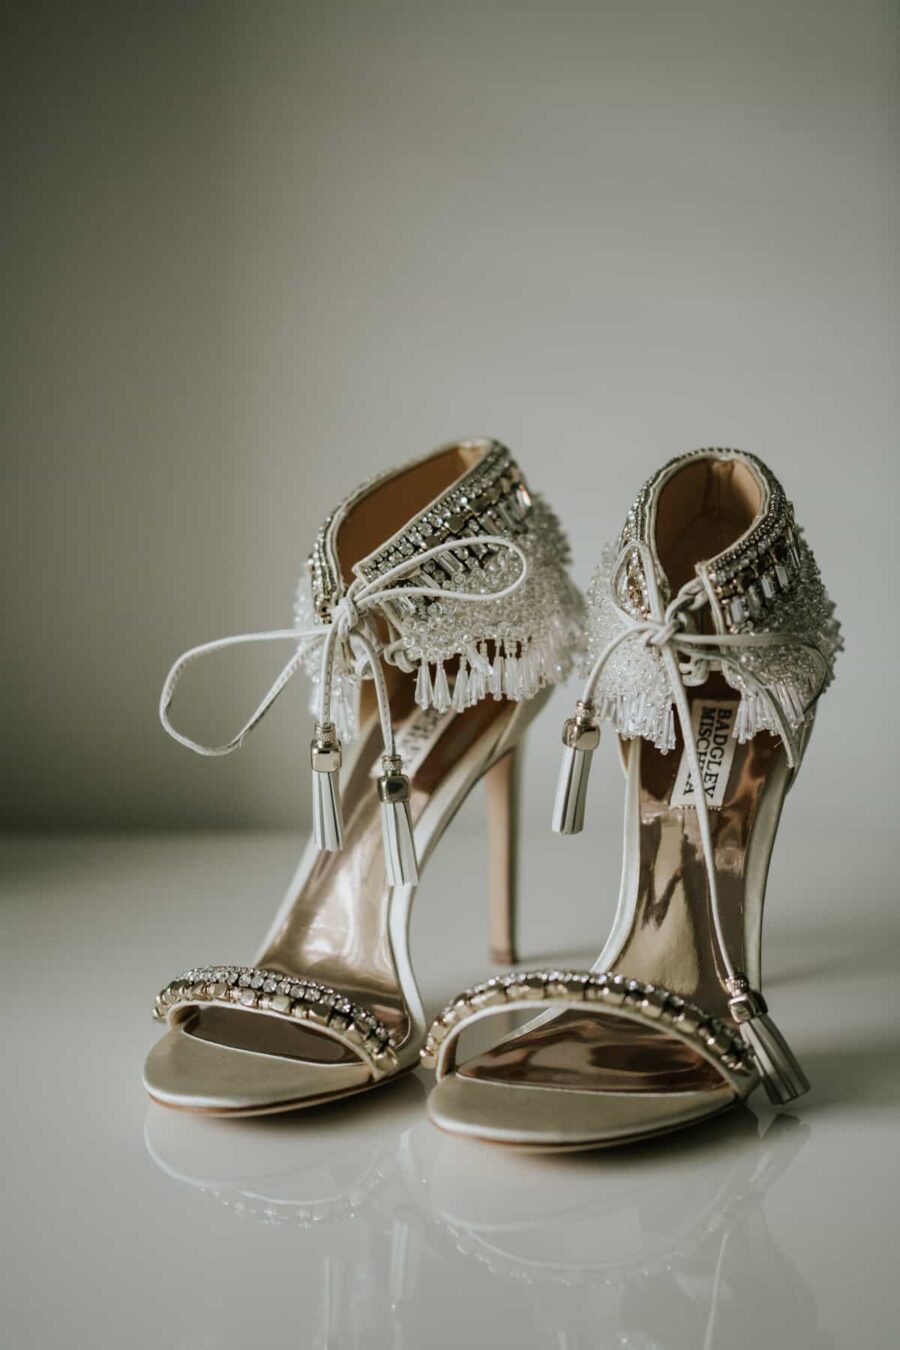 fringed heels by Badgley Mischka